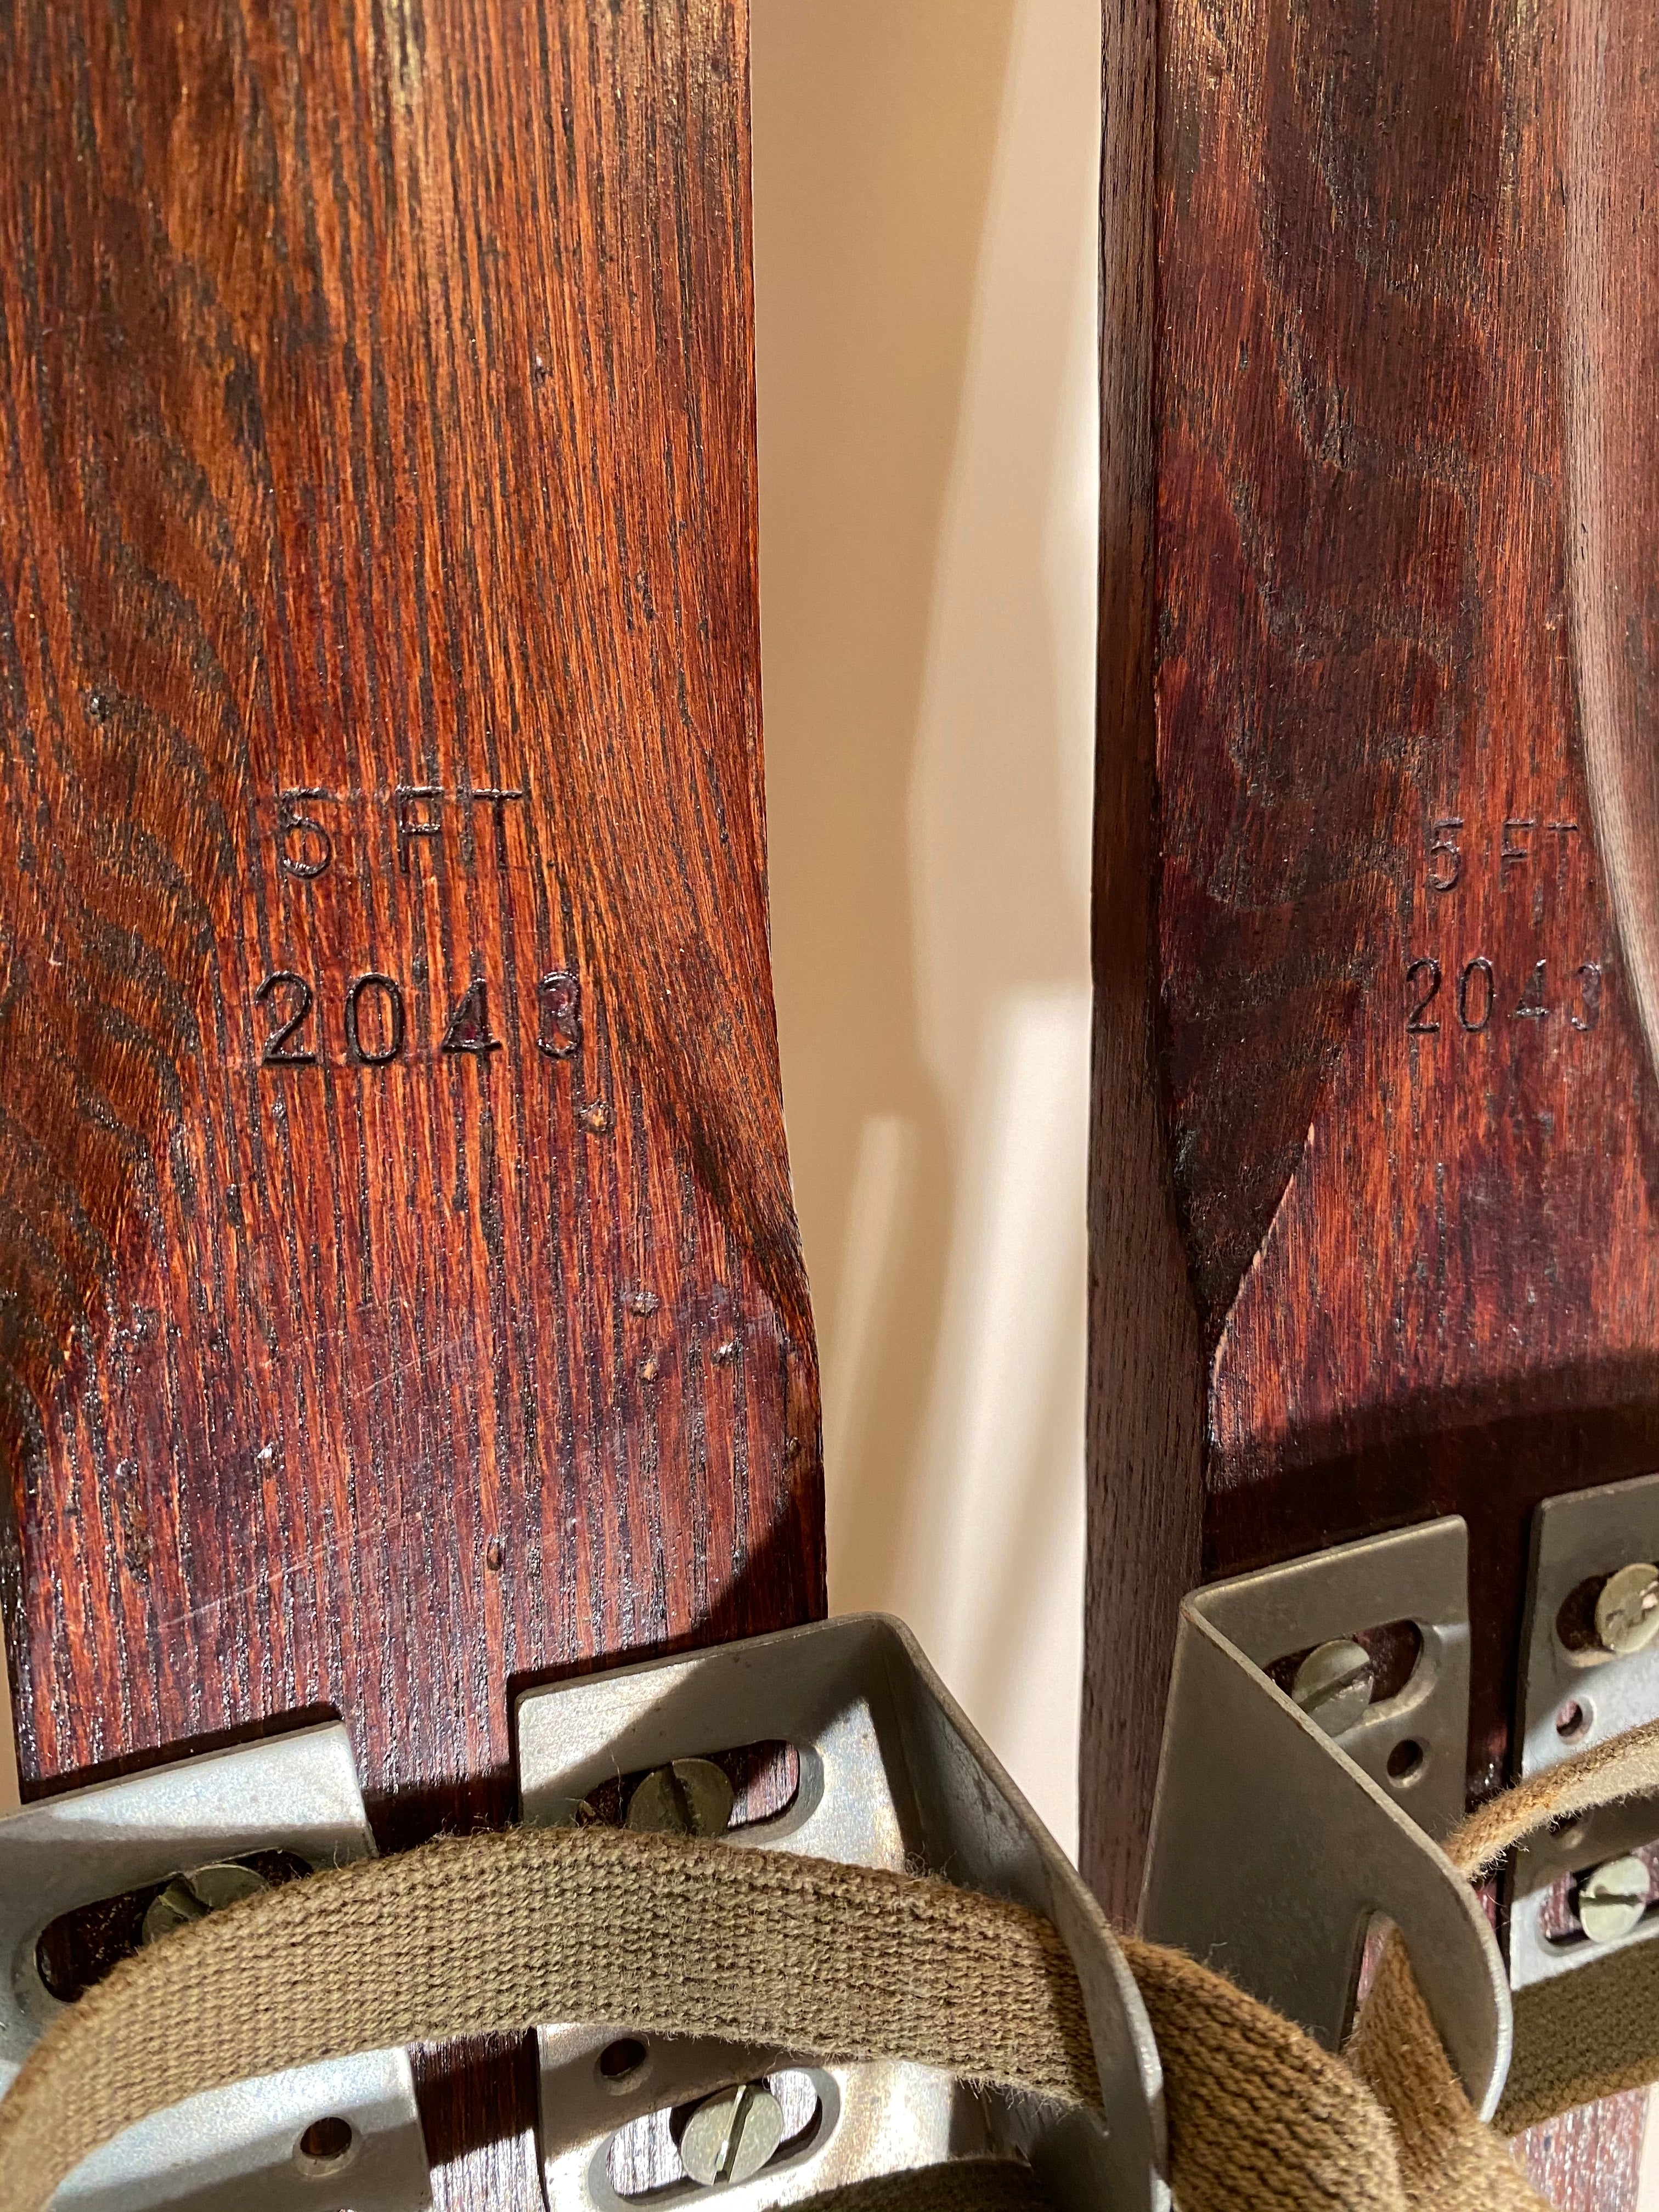 Vintage Wooden Skis 152cm No Brand